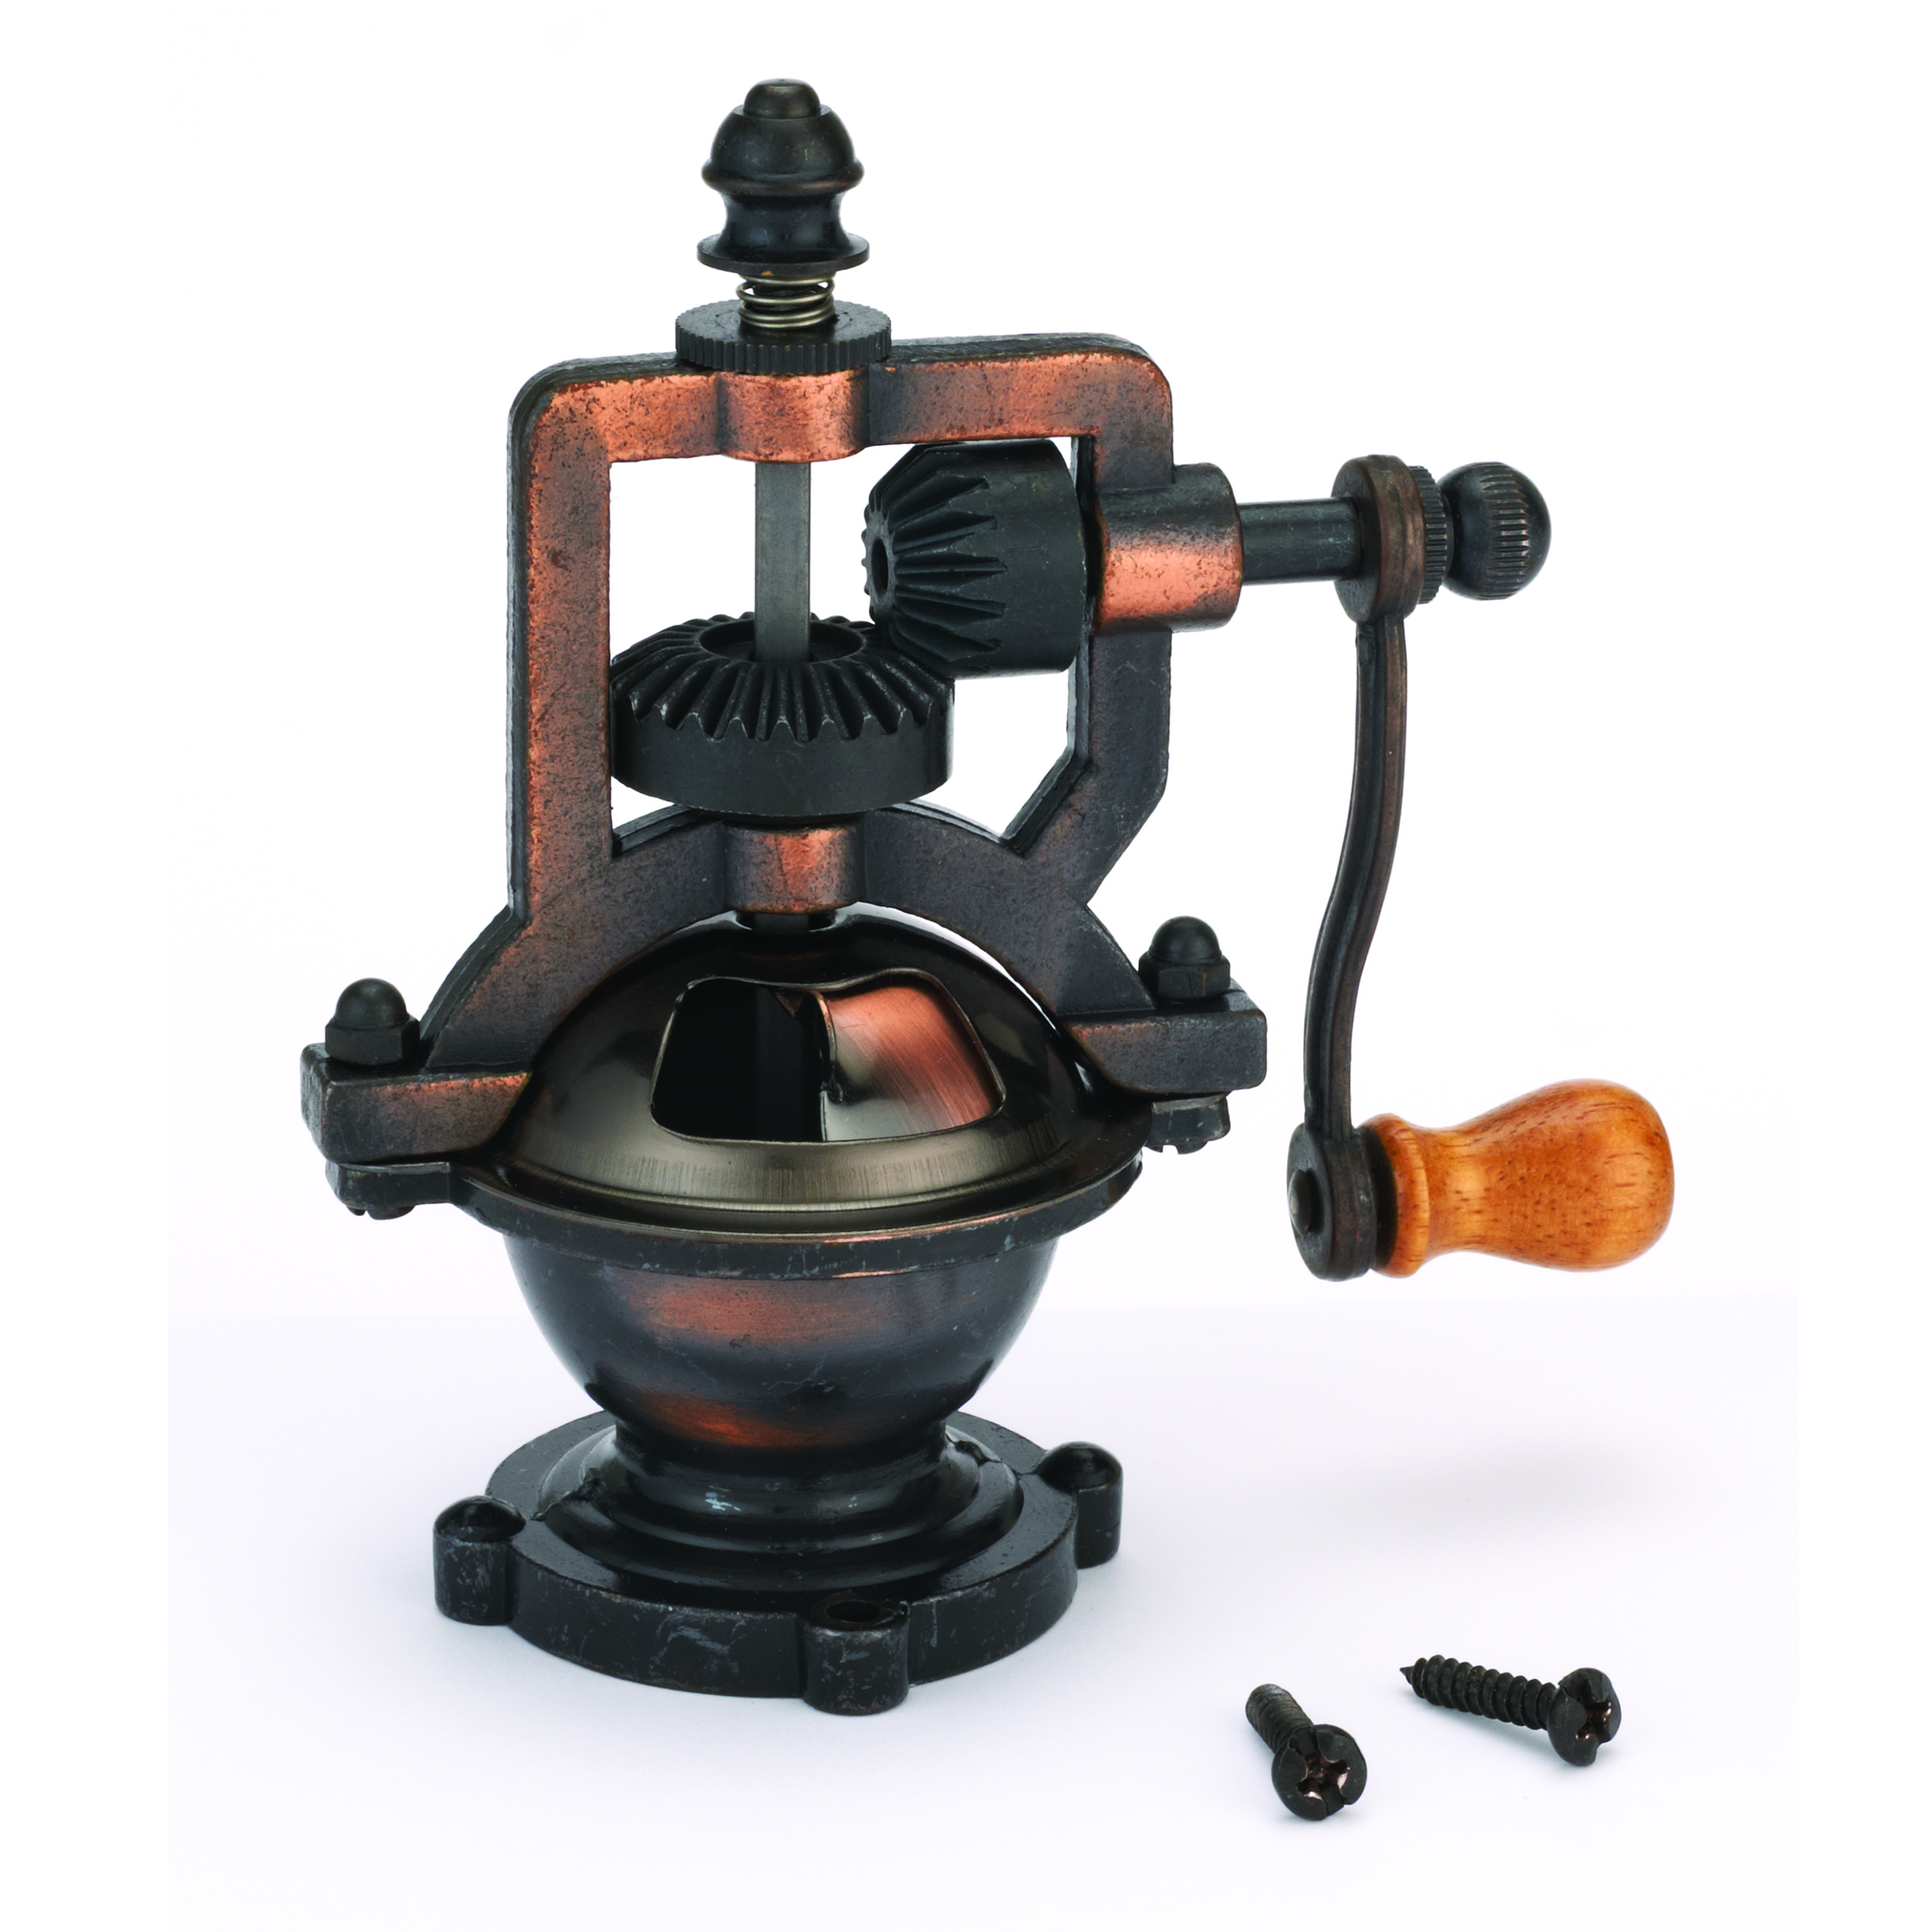 Antique Style Hand Crank Pepper Grinder Kit Mechanism - Antique Copper